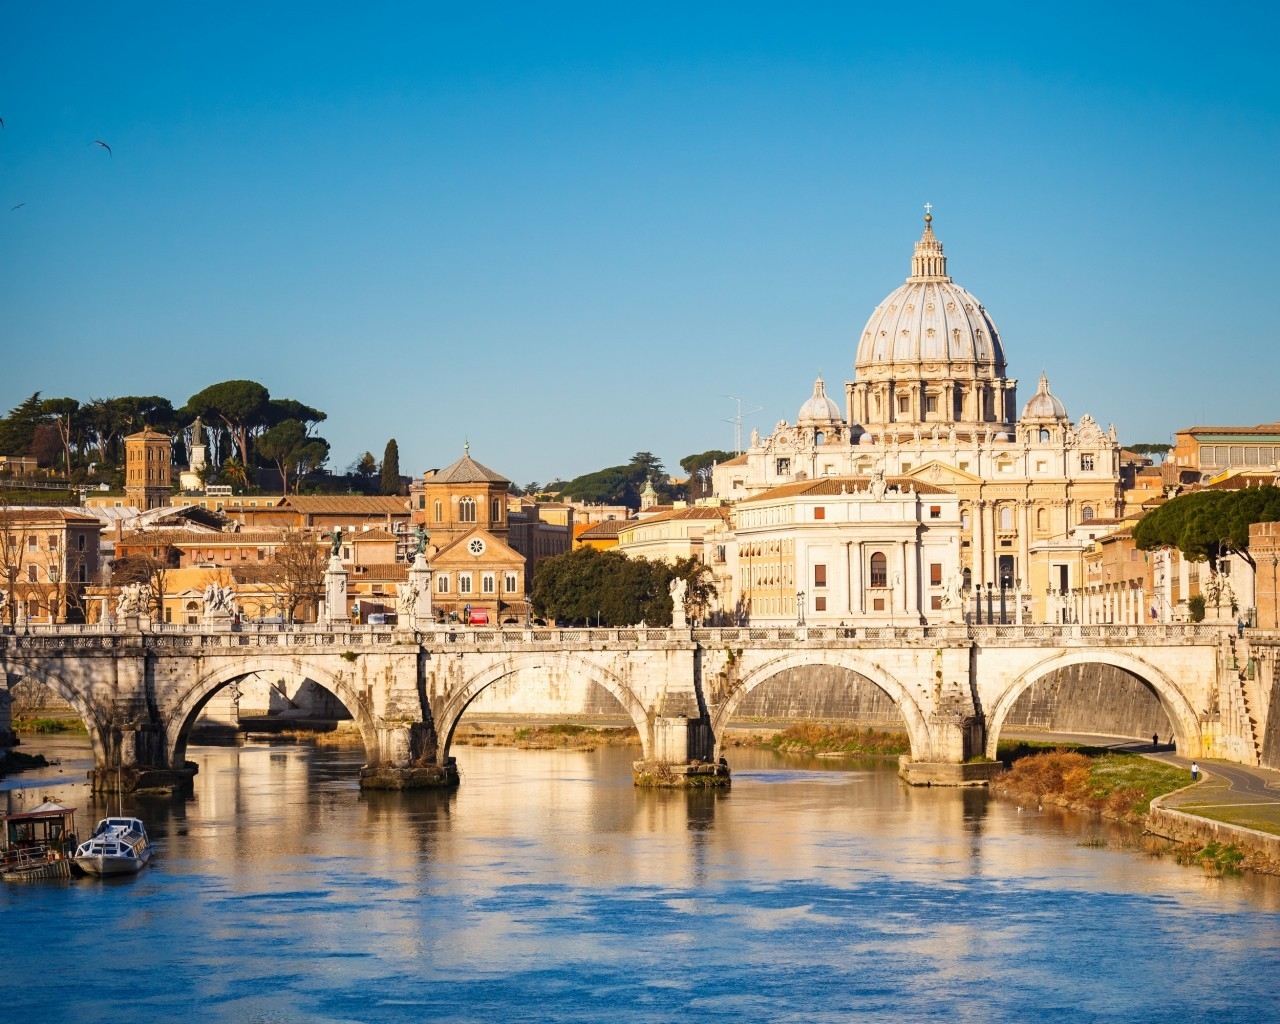 Bridge View Rome for 1280 x 1024 resolution